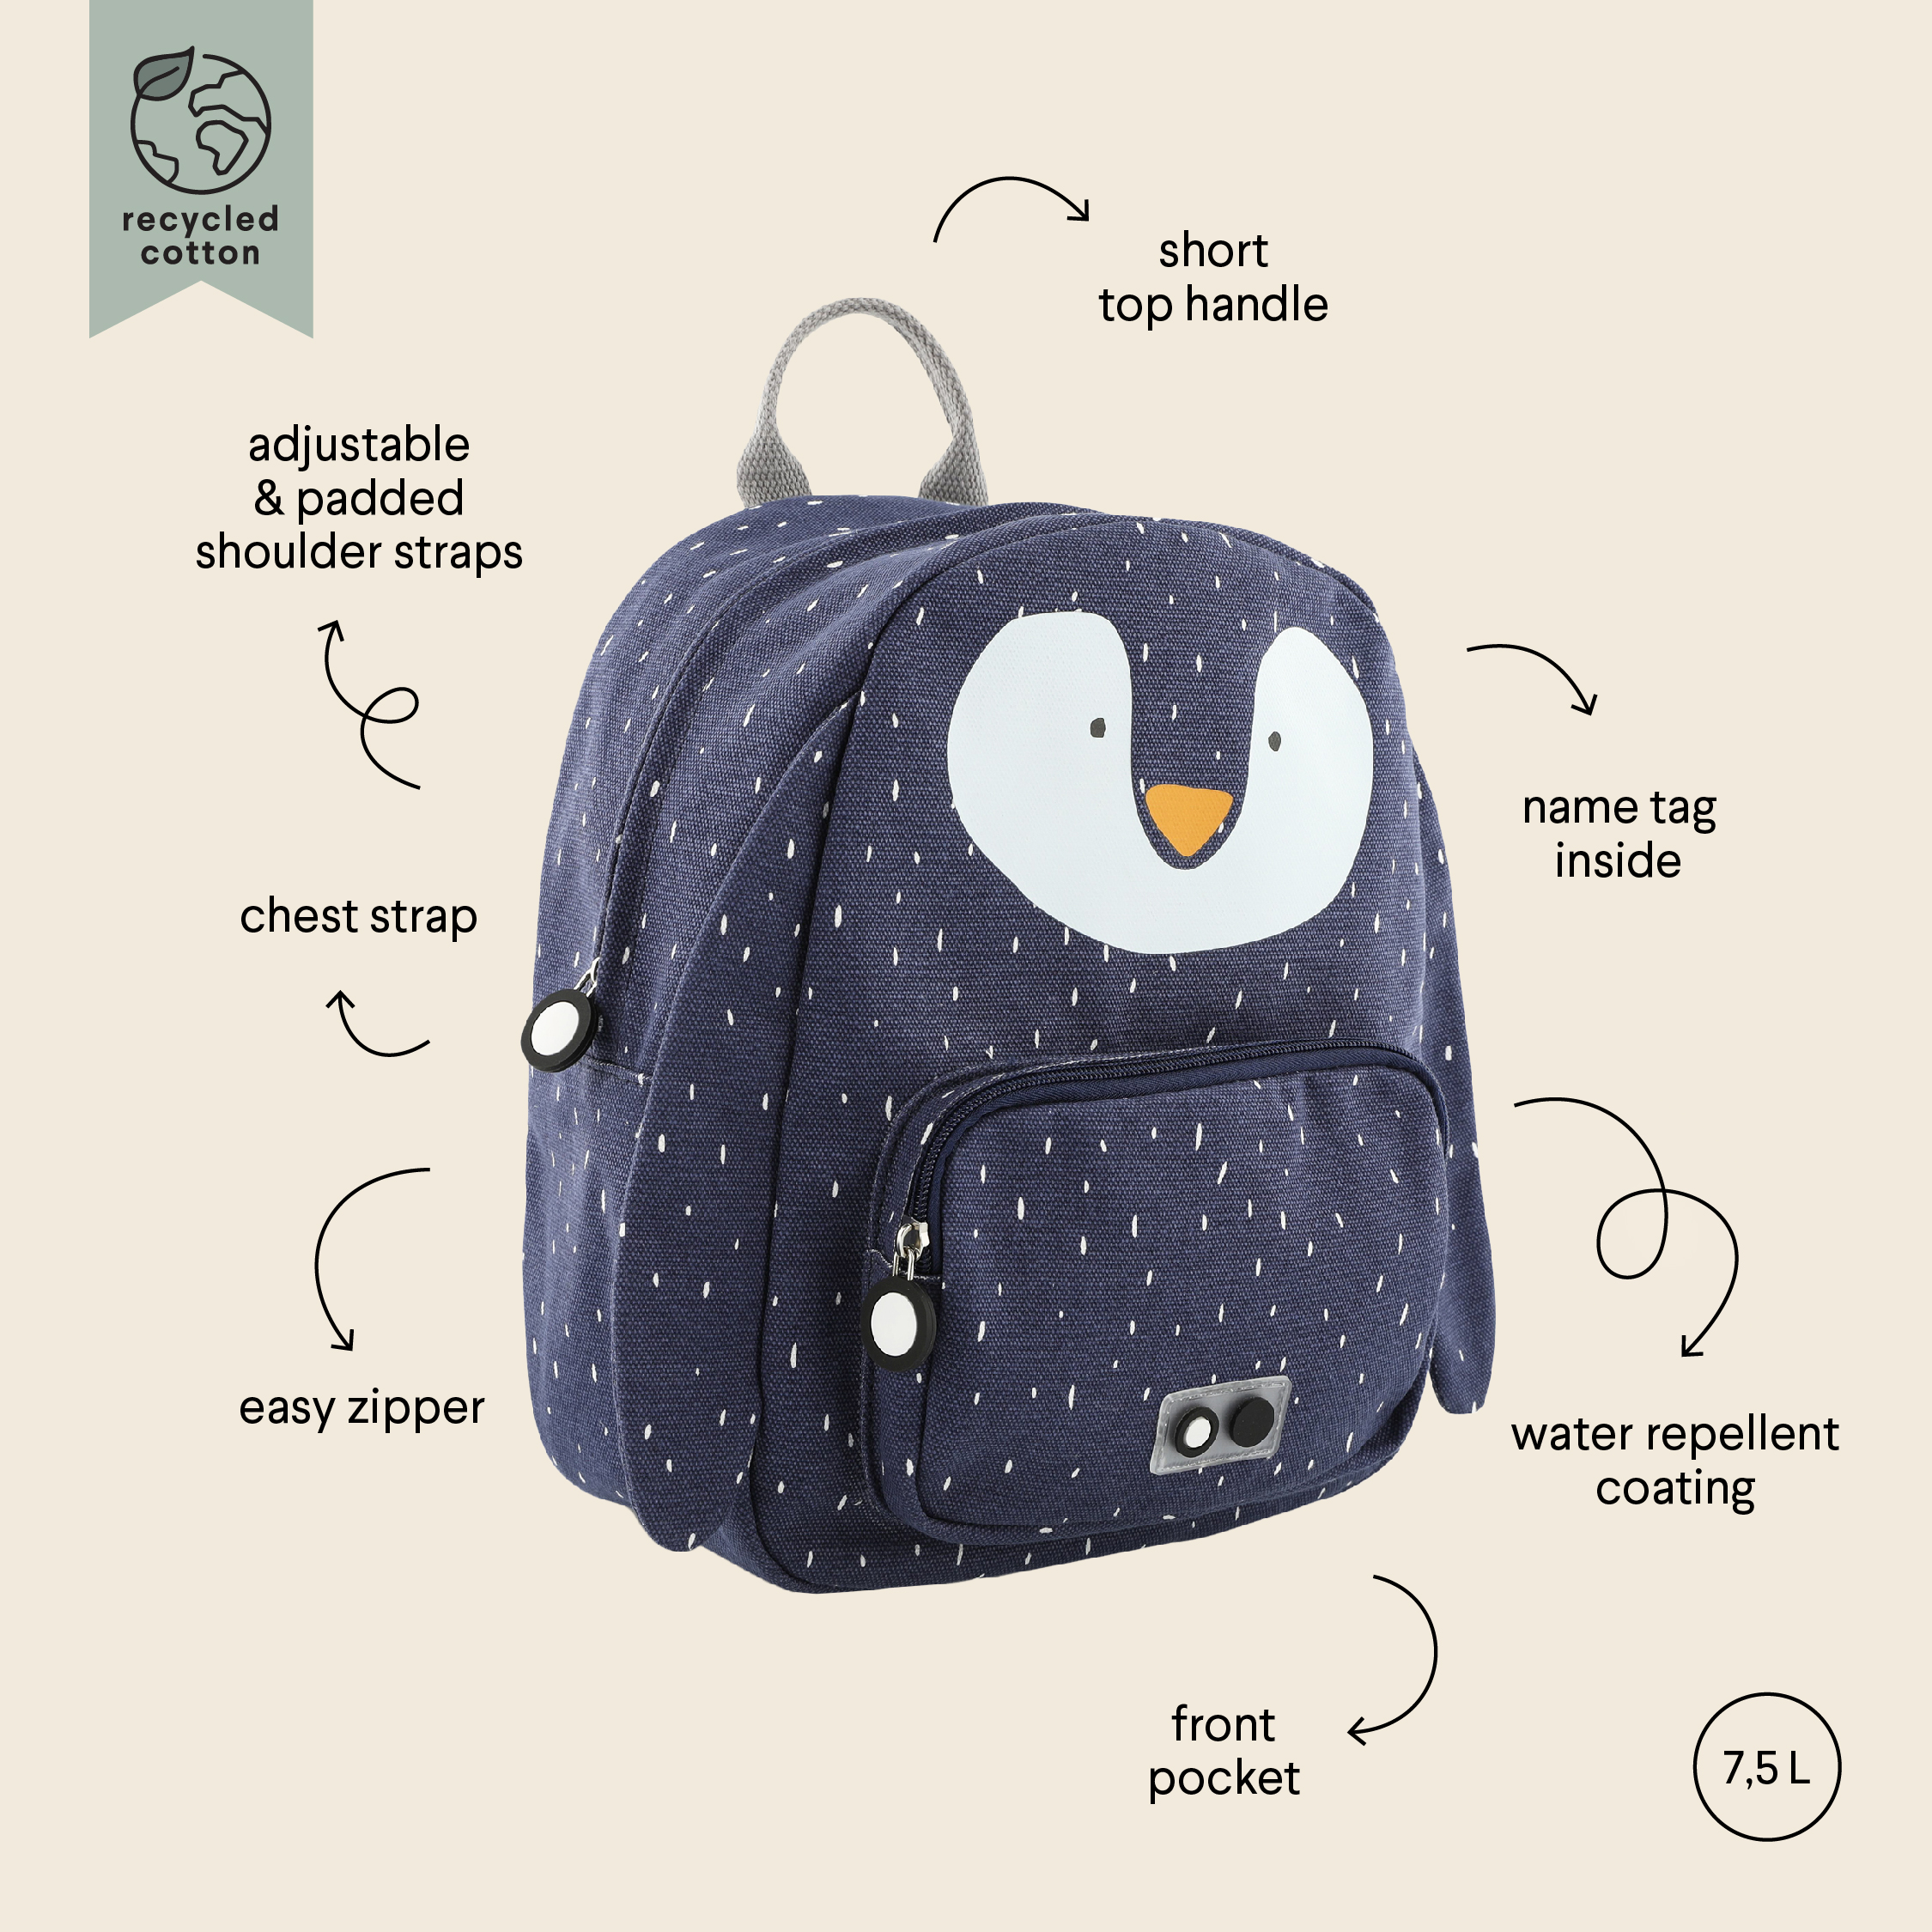 Backpack - Mr. Penguin